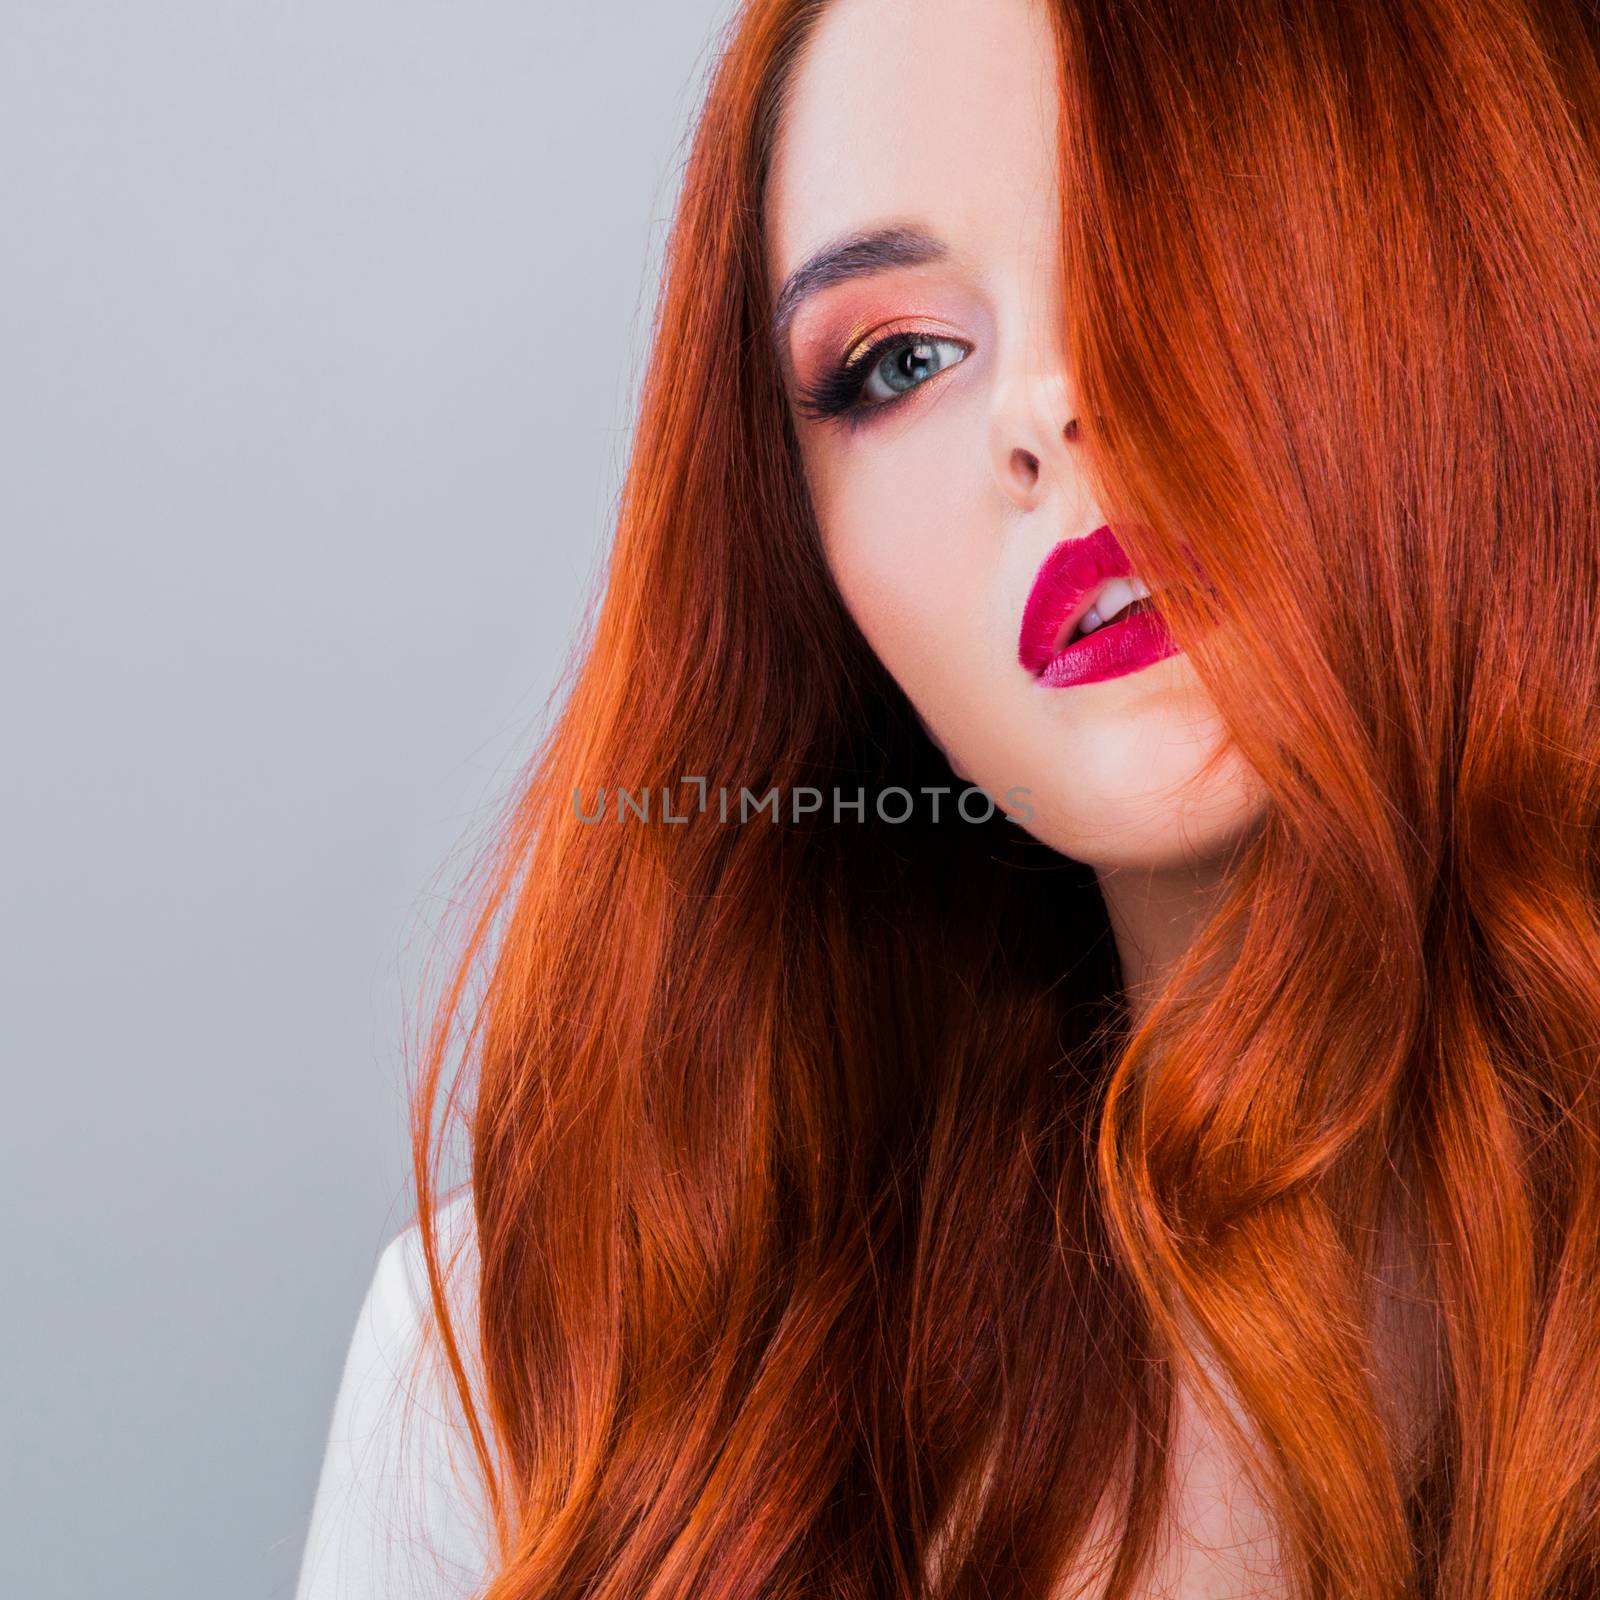 Gorgeous redhead girl by Yellowj